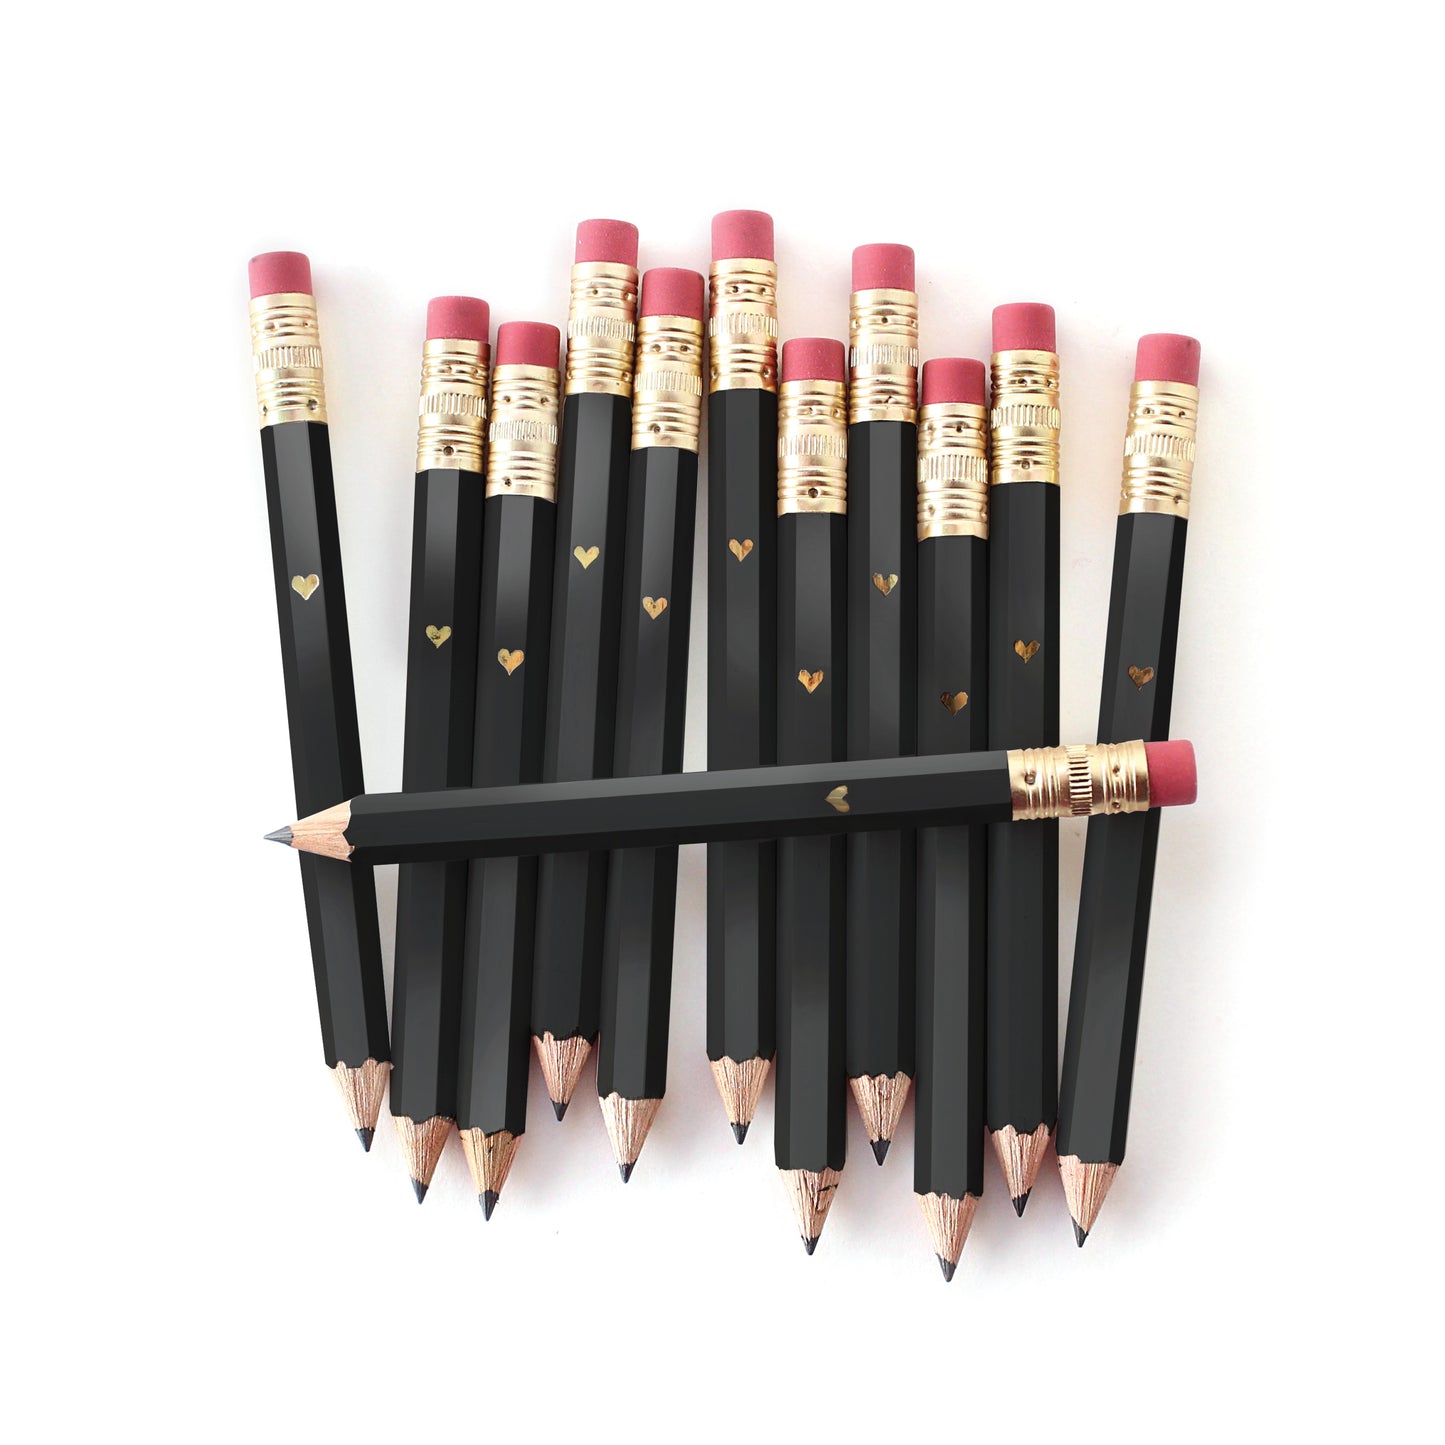 black mini pencils with gold hearts